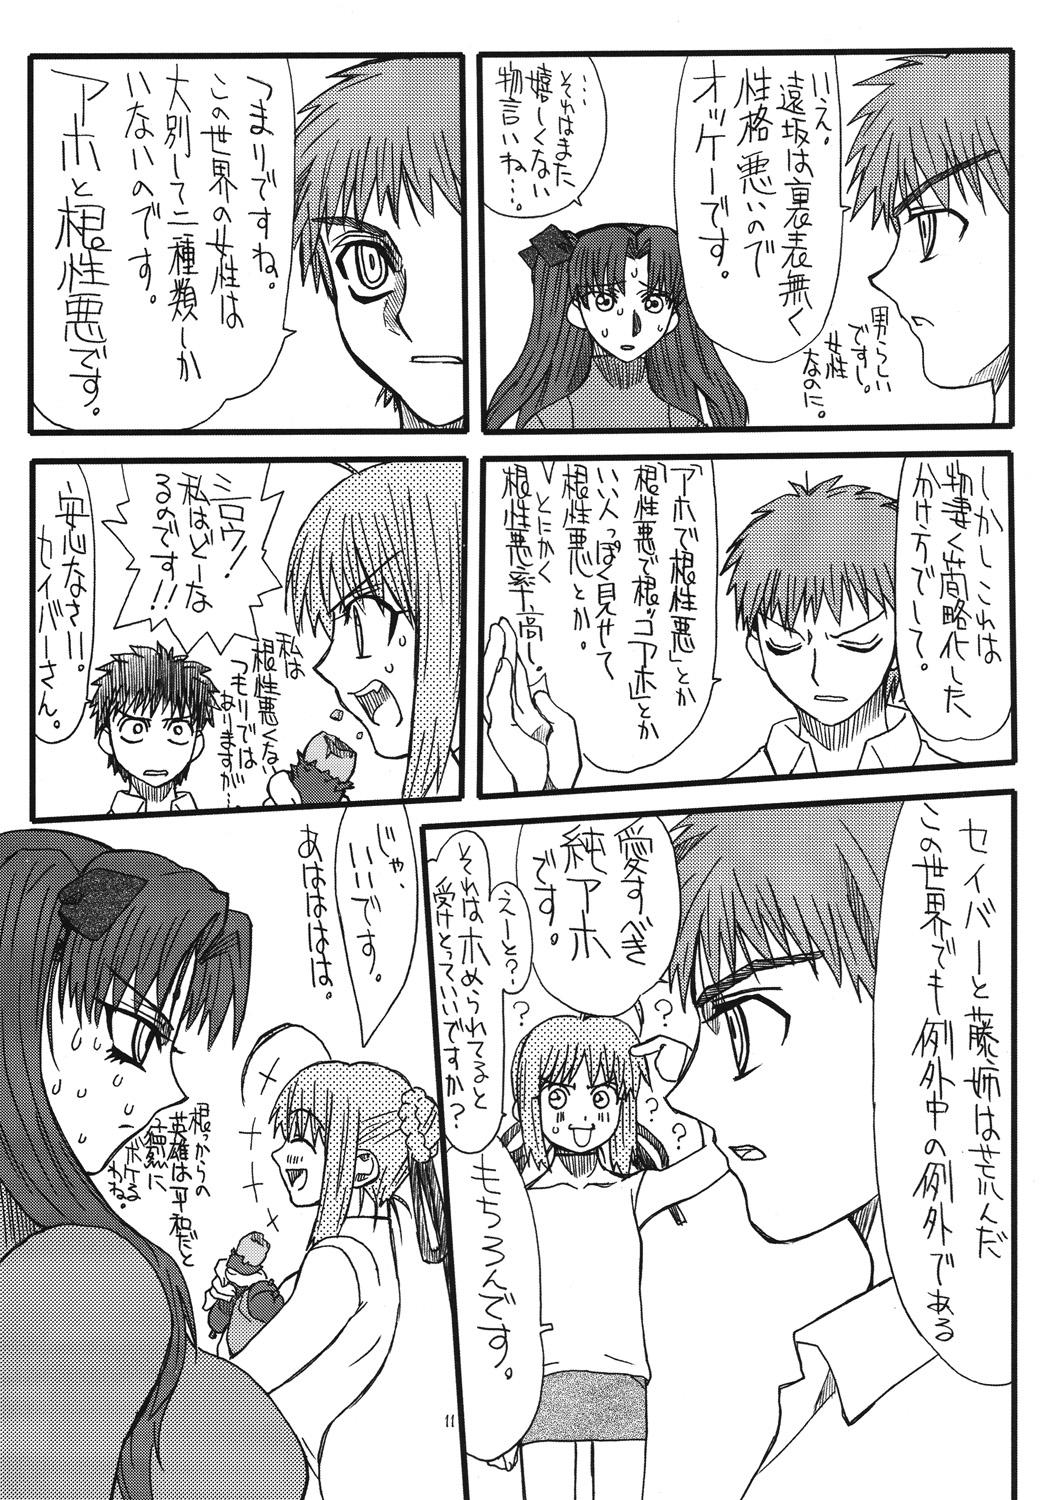 Story Kurenai Hoppe 2 - Fate stay night 8teenxxx - Page 10